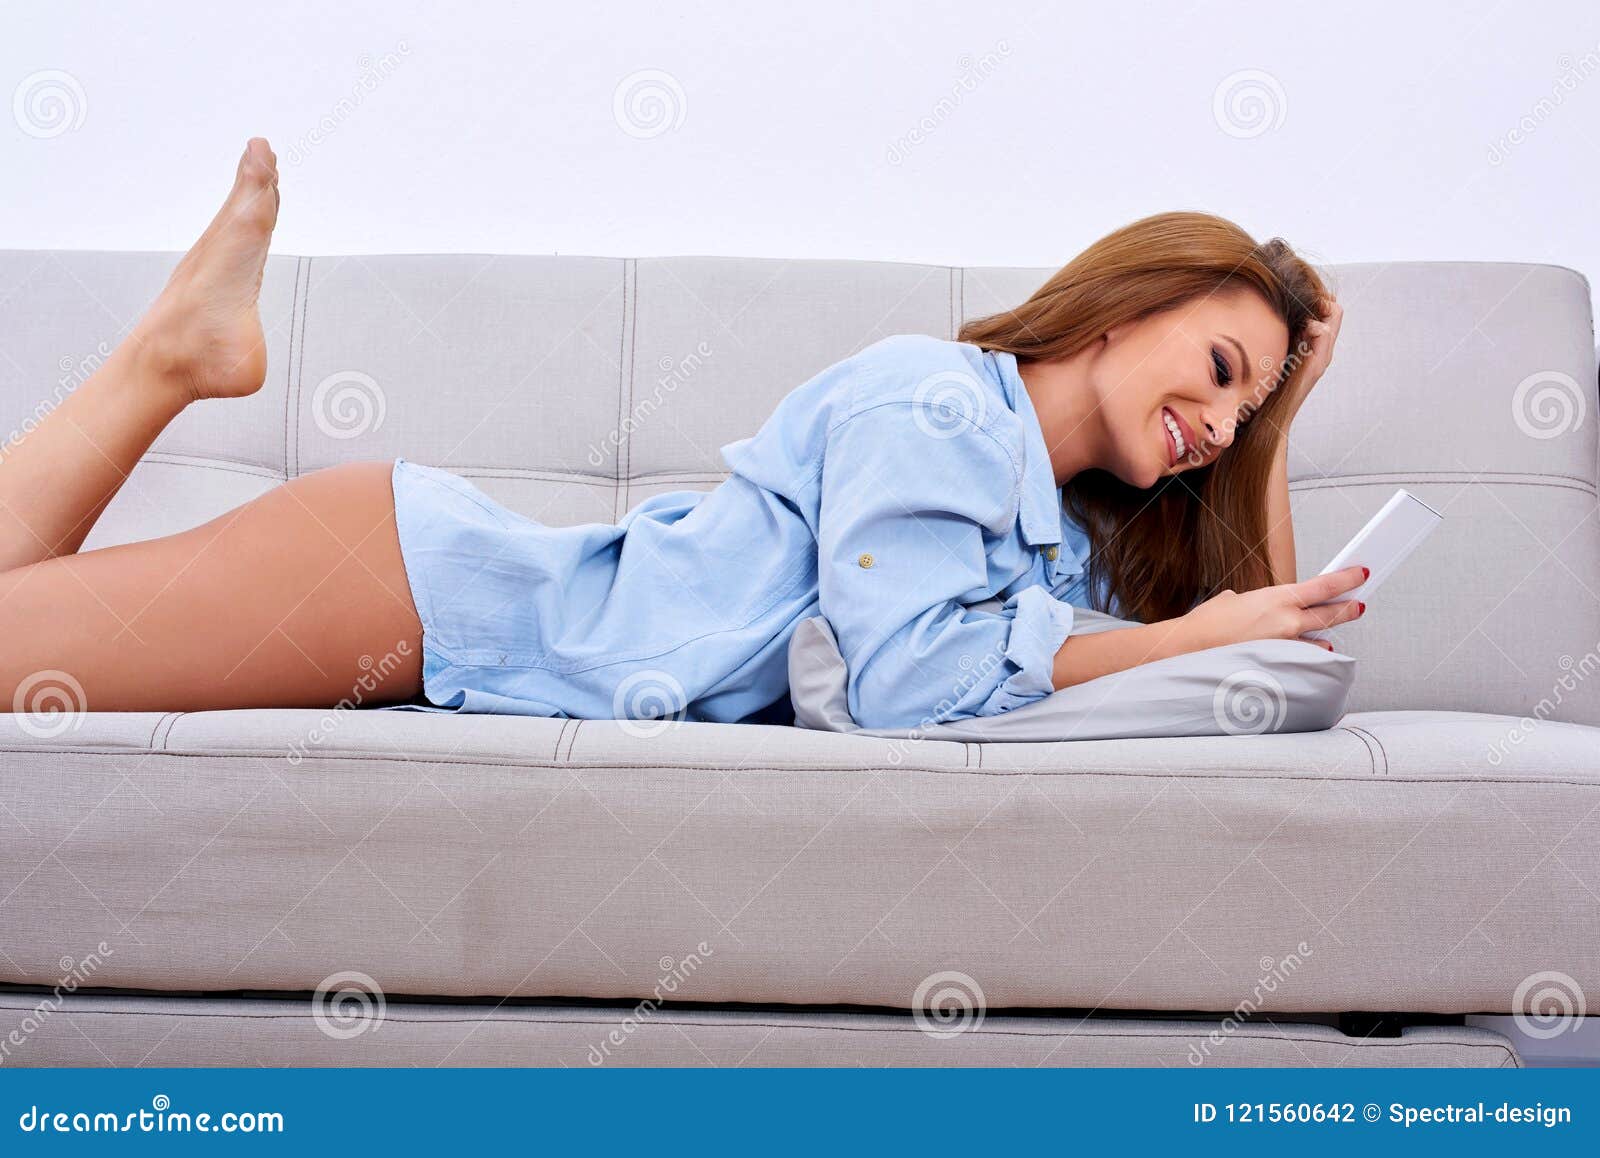 Spektakel ik ben gelukkig zuiverheid A Smiling Woman Laying on a Sofa and Using Her Smartphone Stock Photo -  Image of phone, nude: 121560642